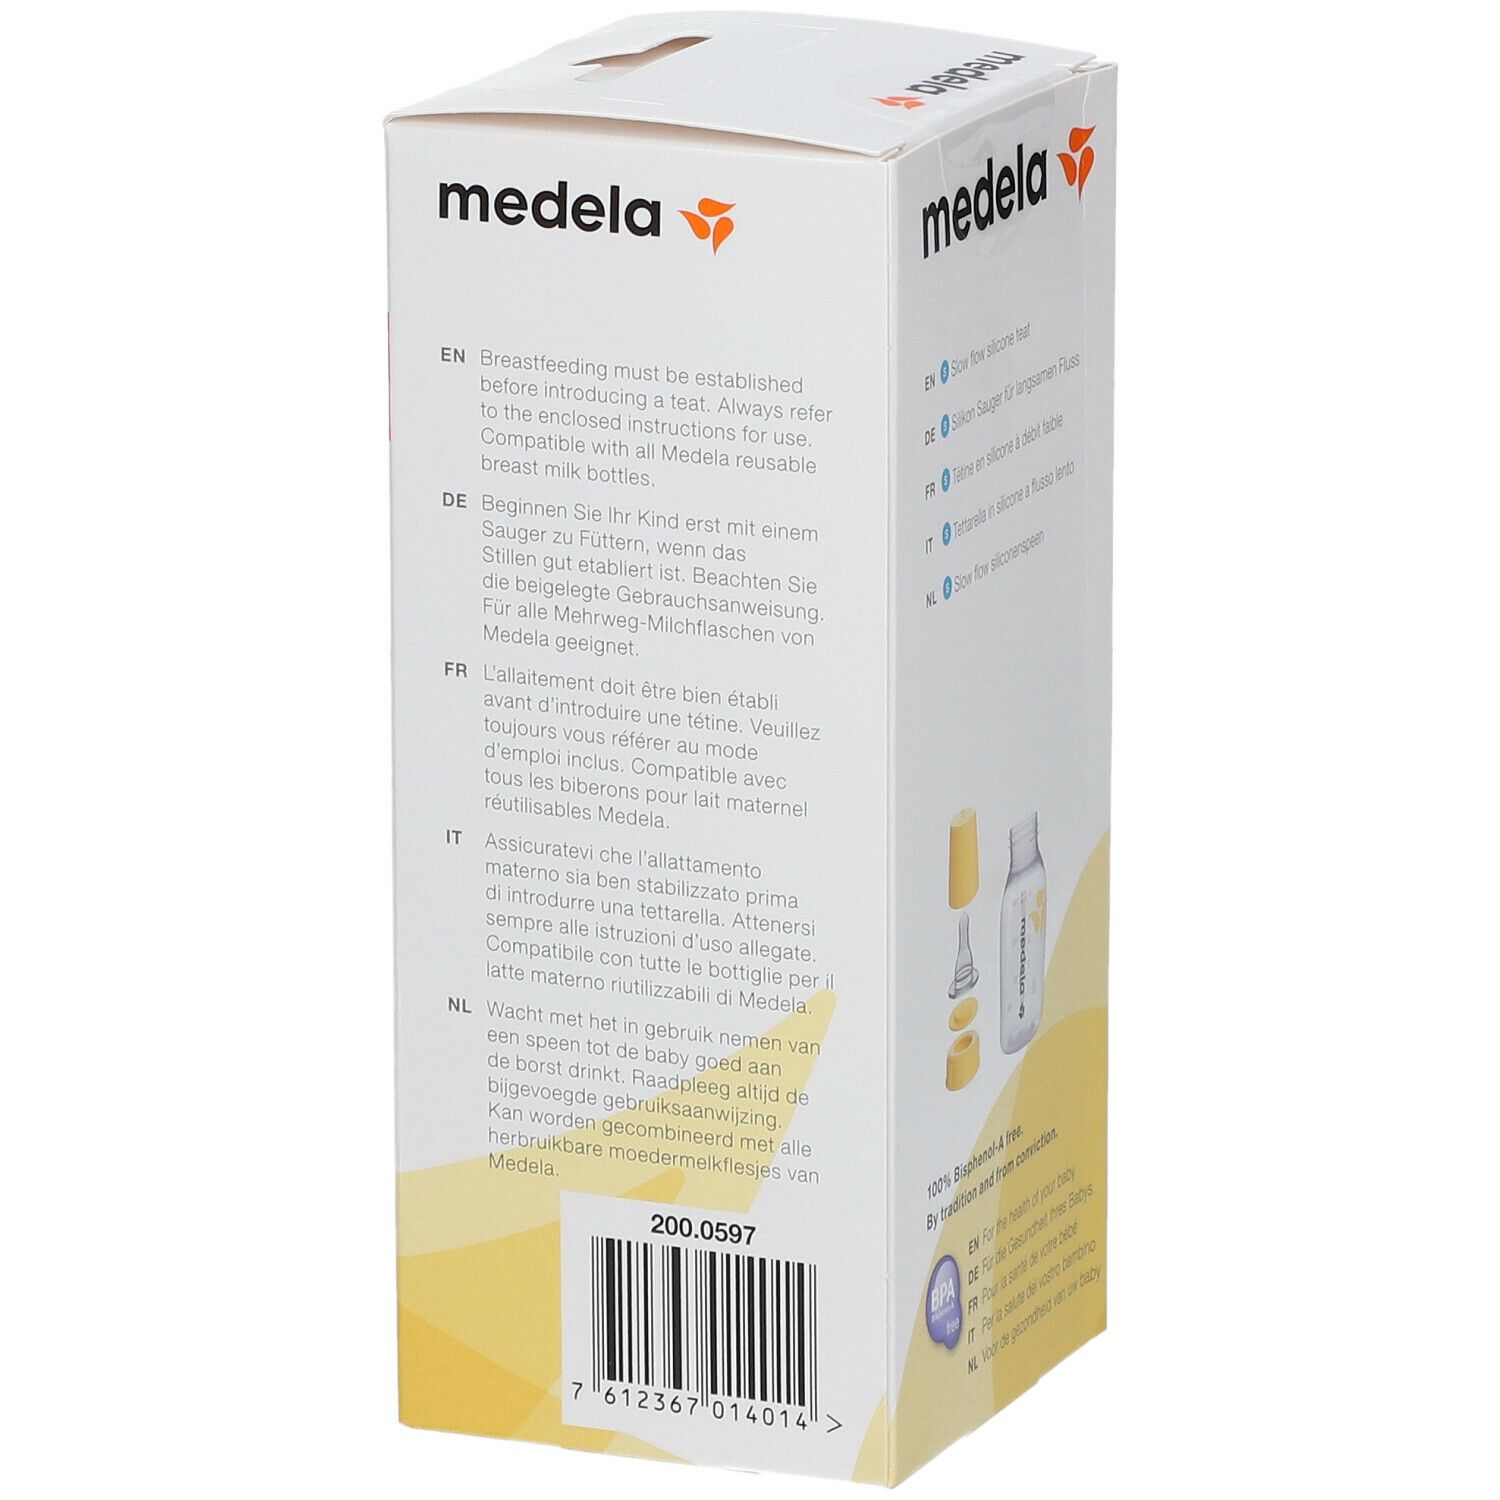 Medela Biberon pour lait maternel avec tétine 150 ml 1 pc(s) - Redcare  Pharmacie